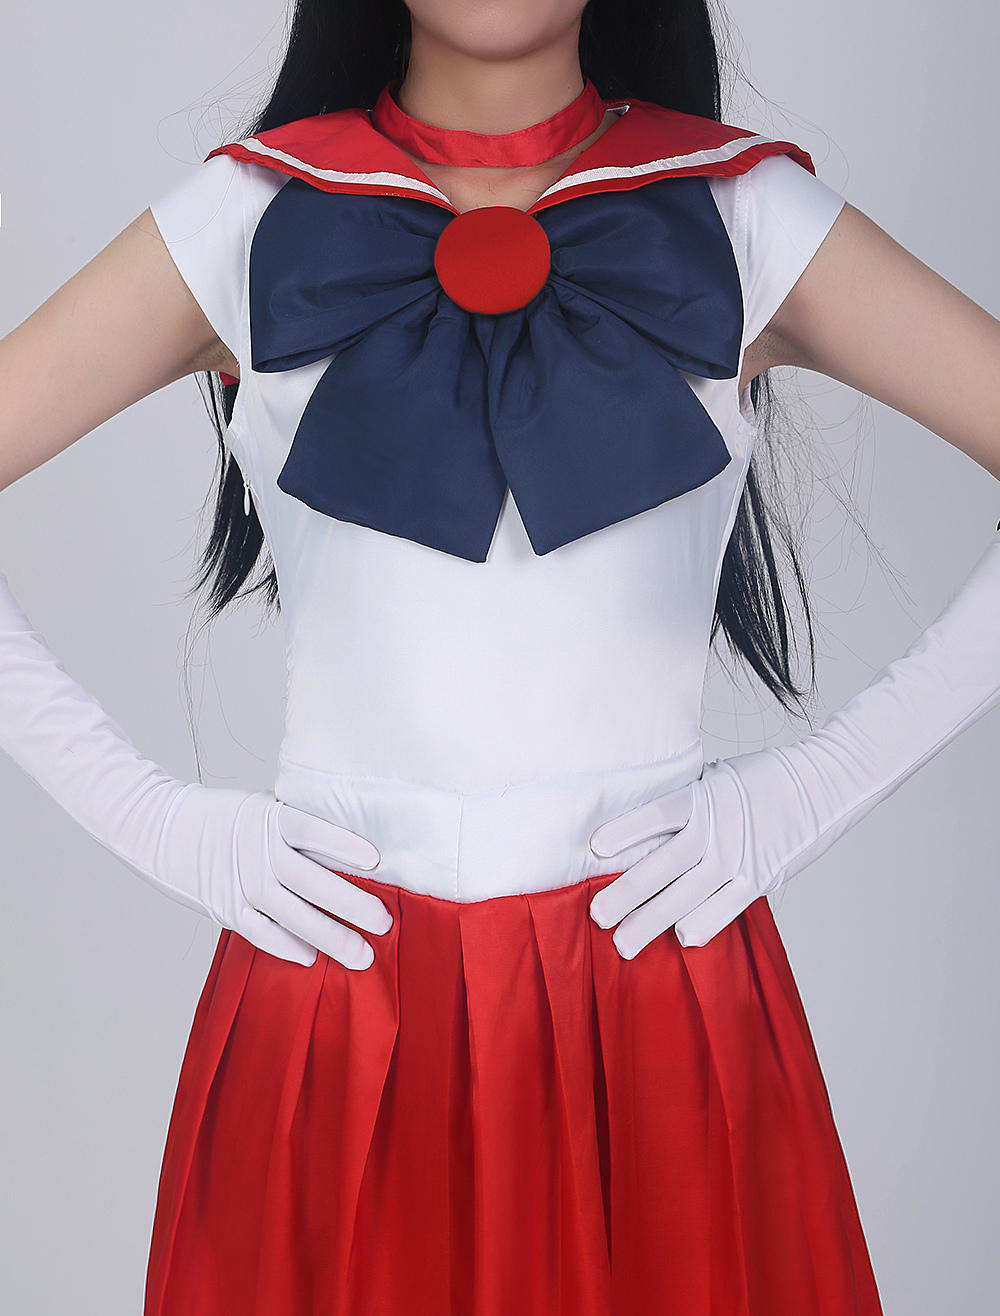 Sailor Moon cosplay costumes,Sailor Moon cosplay costume,Sailor Moon ...